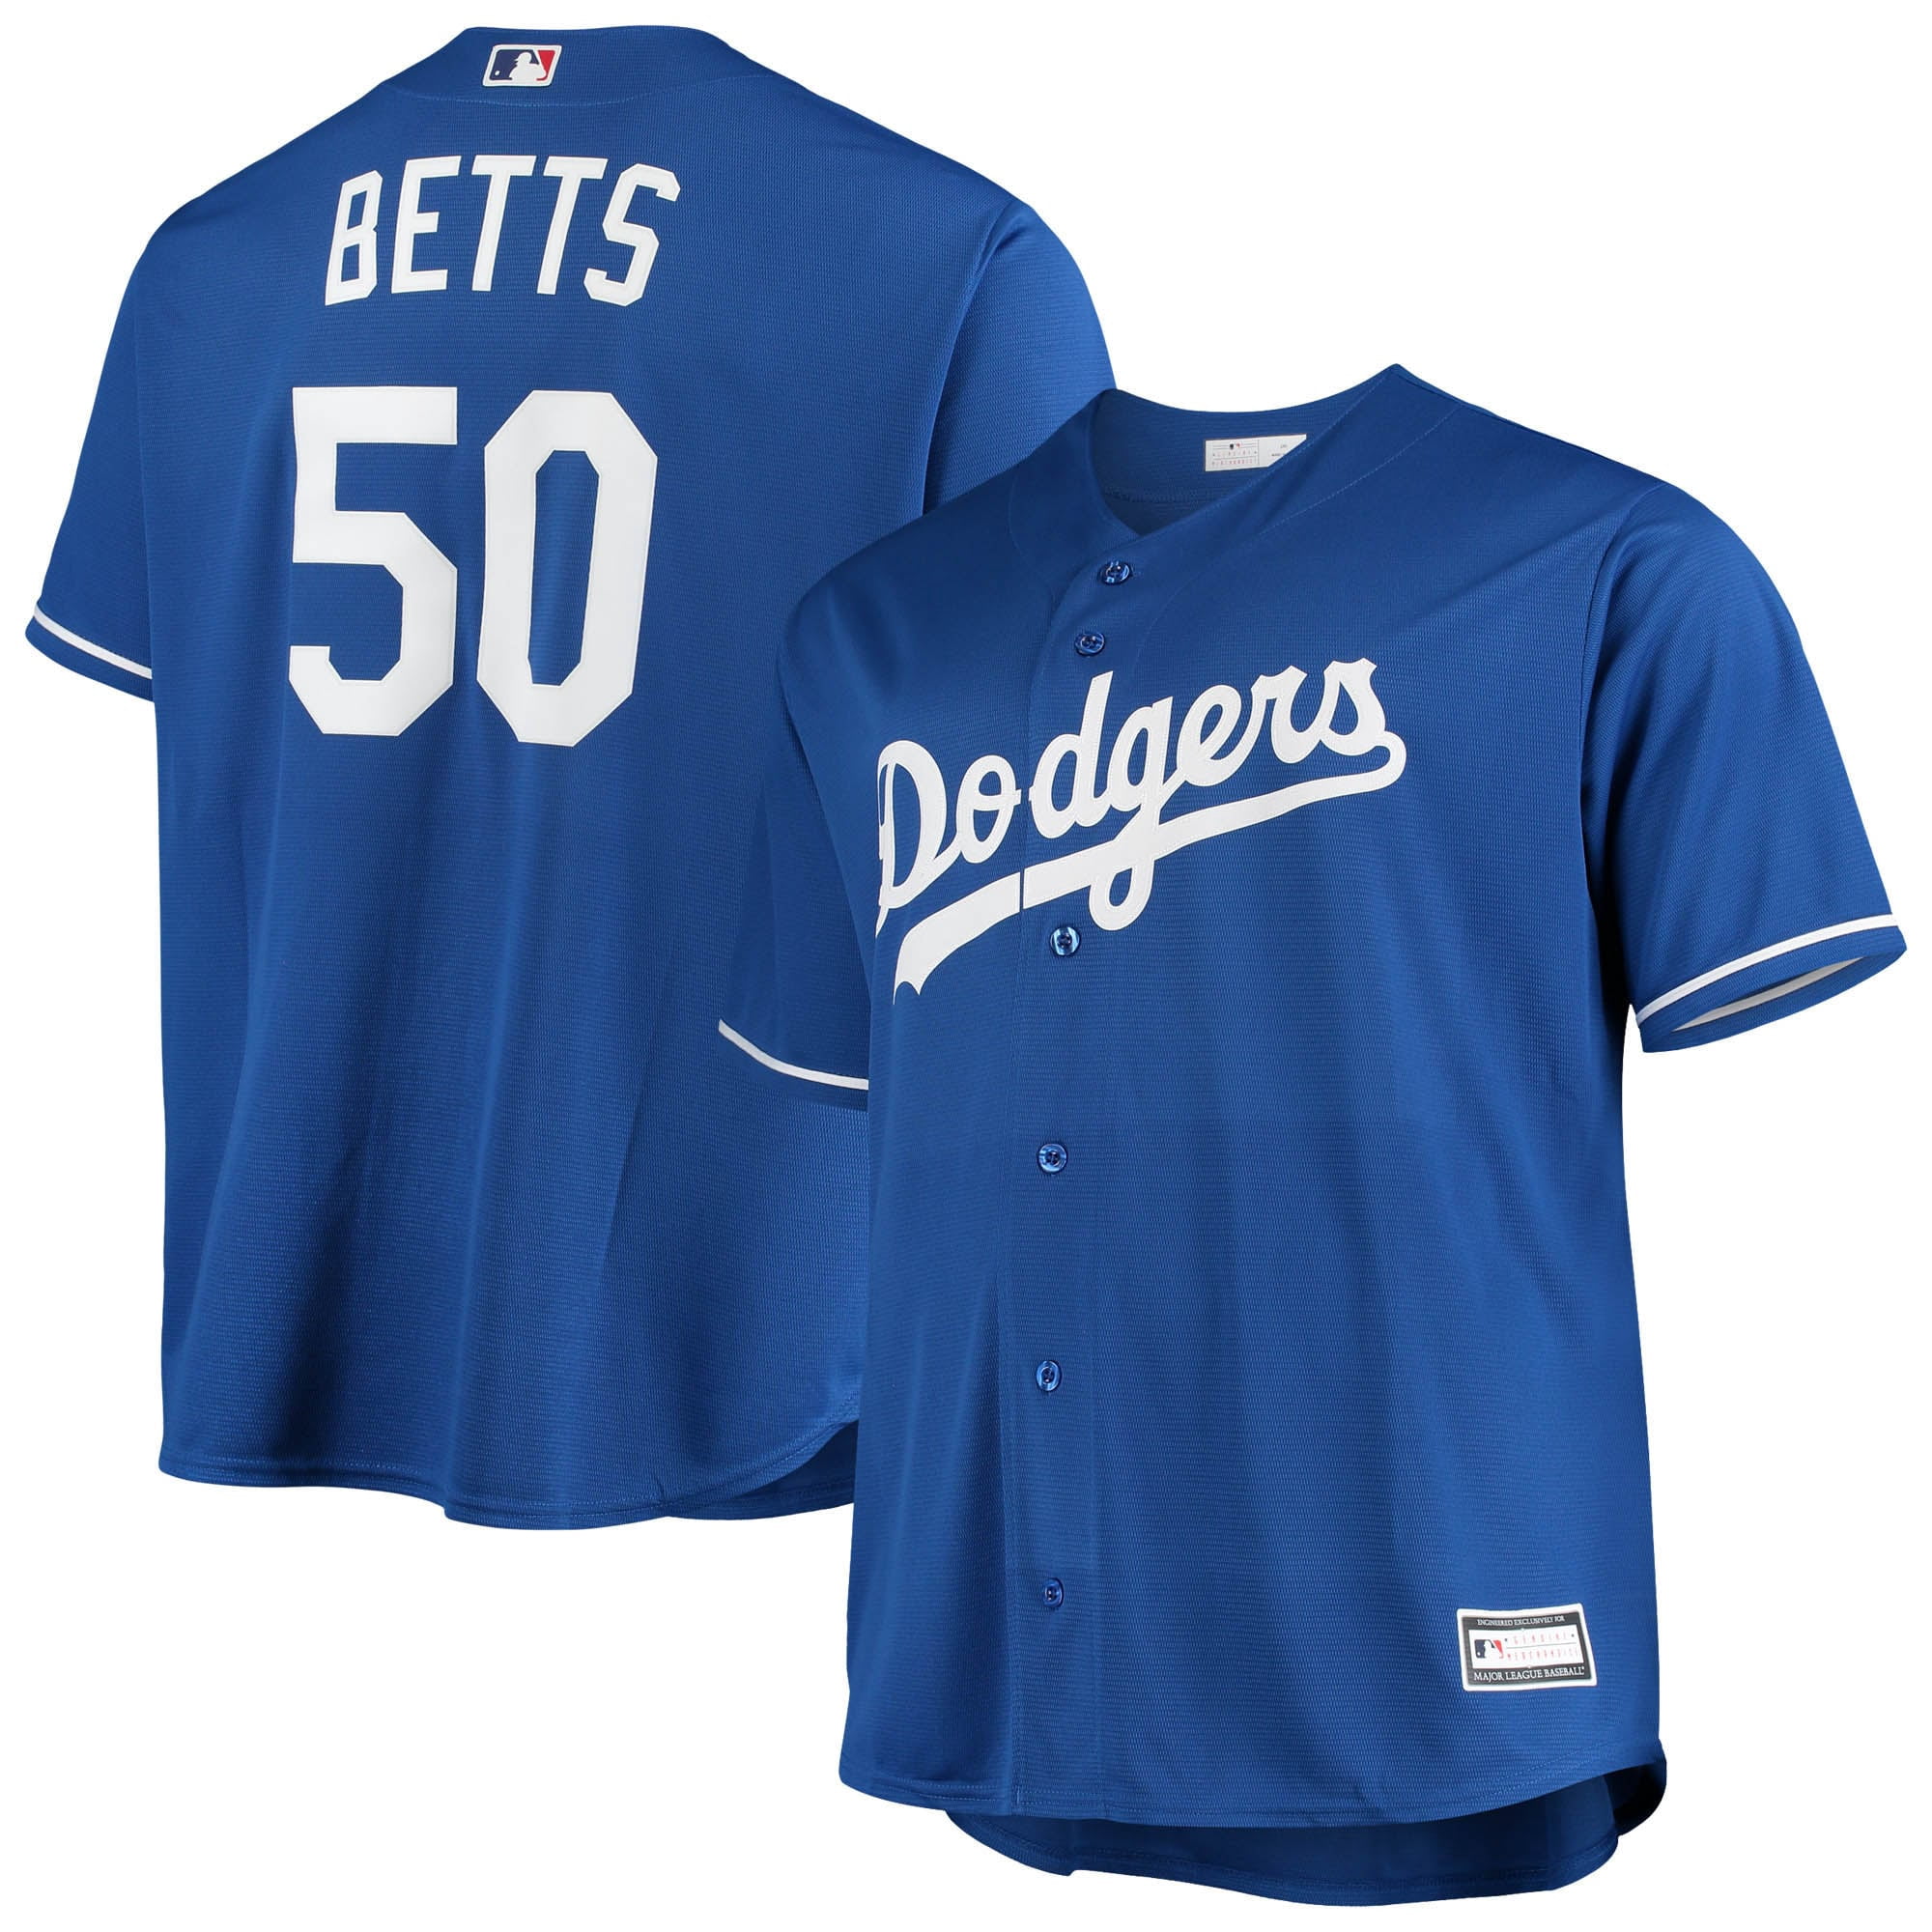 Los Angeles Dodgers Mookie Betts Jersey